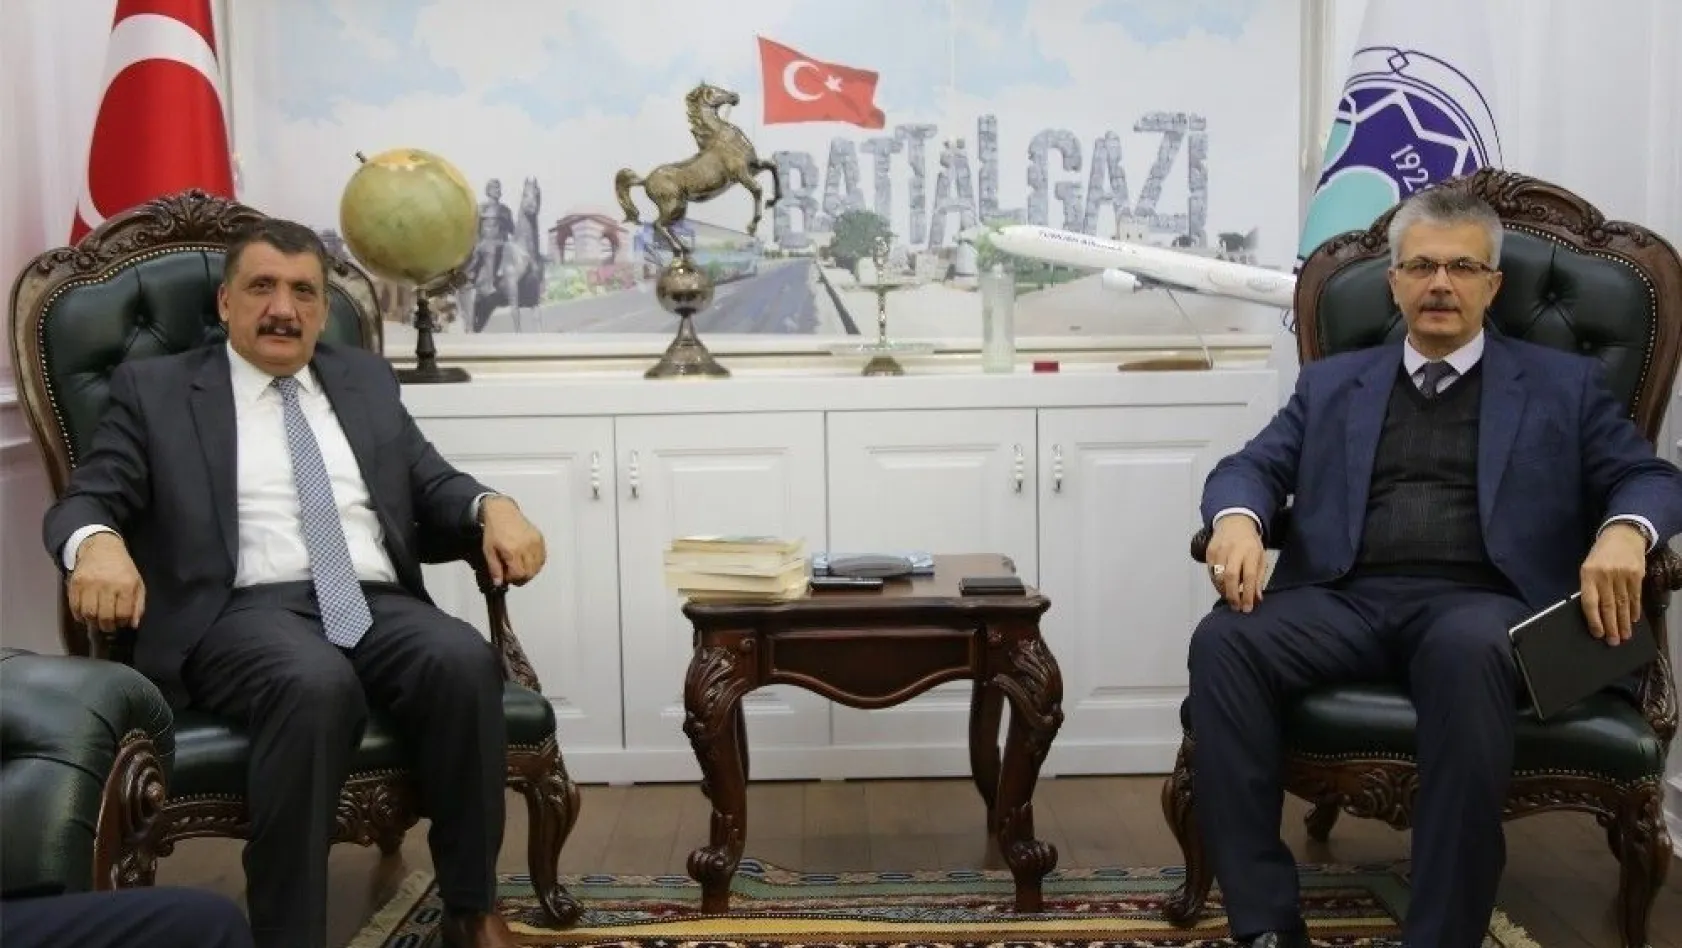 Başkan Gürkan'dan BİLSAM'a övgü
